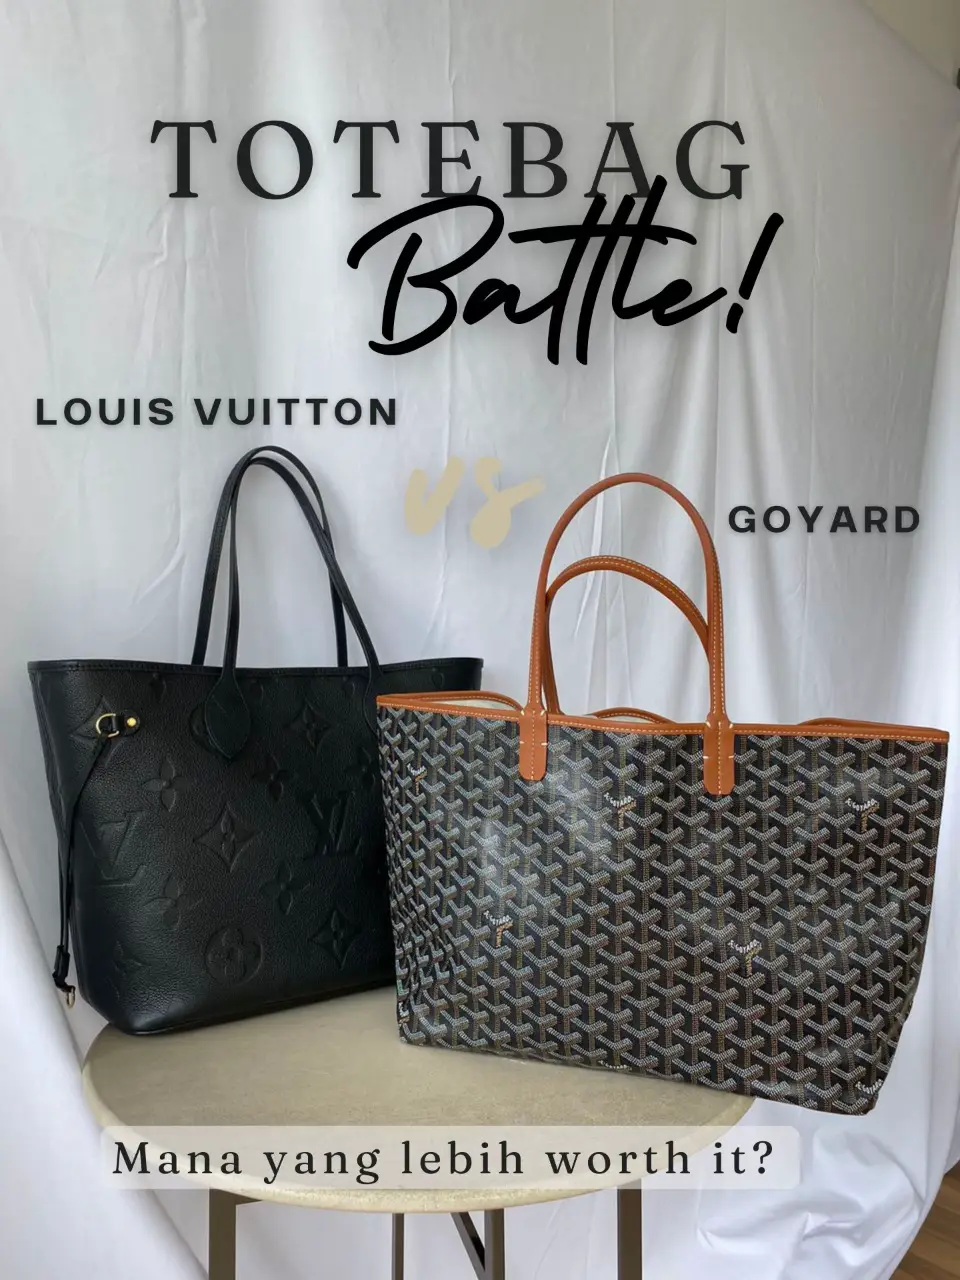 Totebag Battle: Louis Vuitton vs Goyard, Gallery posted by Natasshanjani